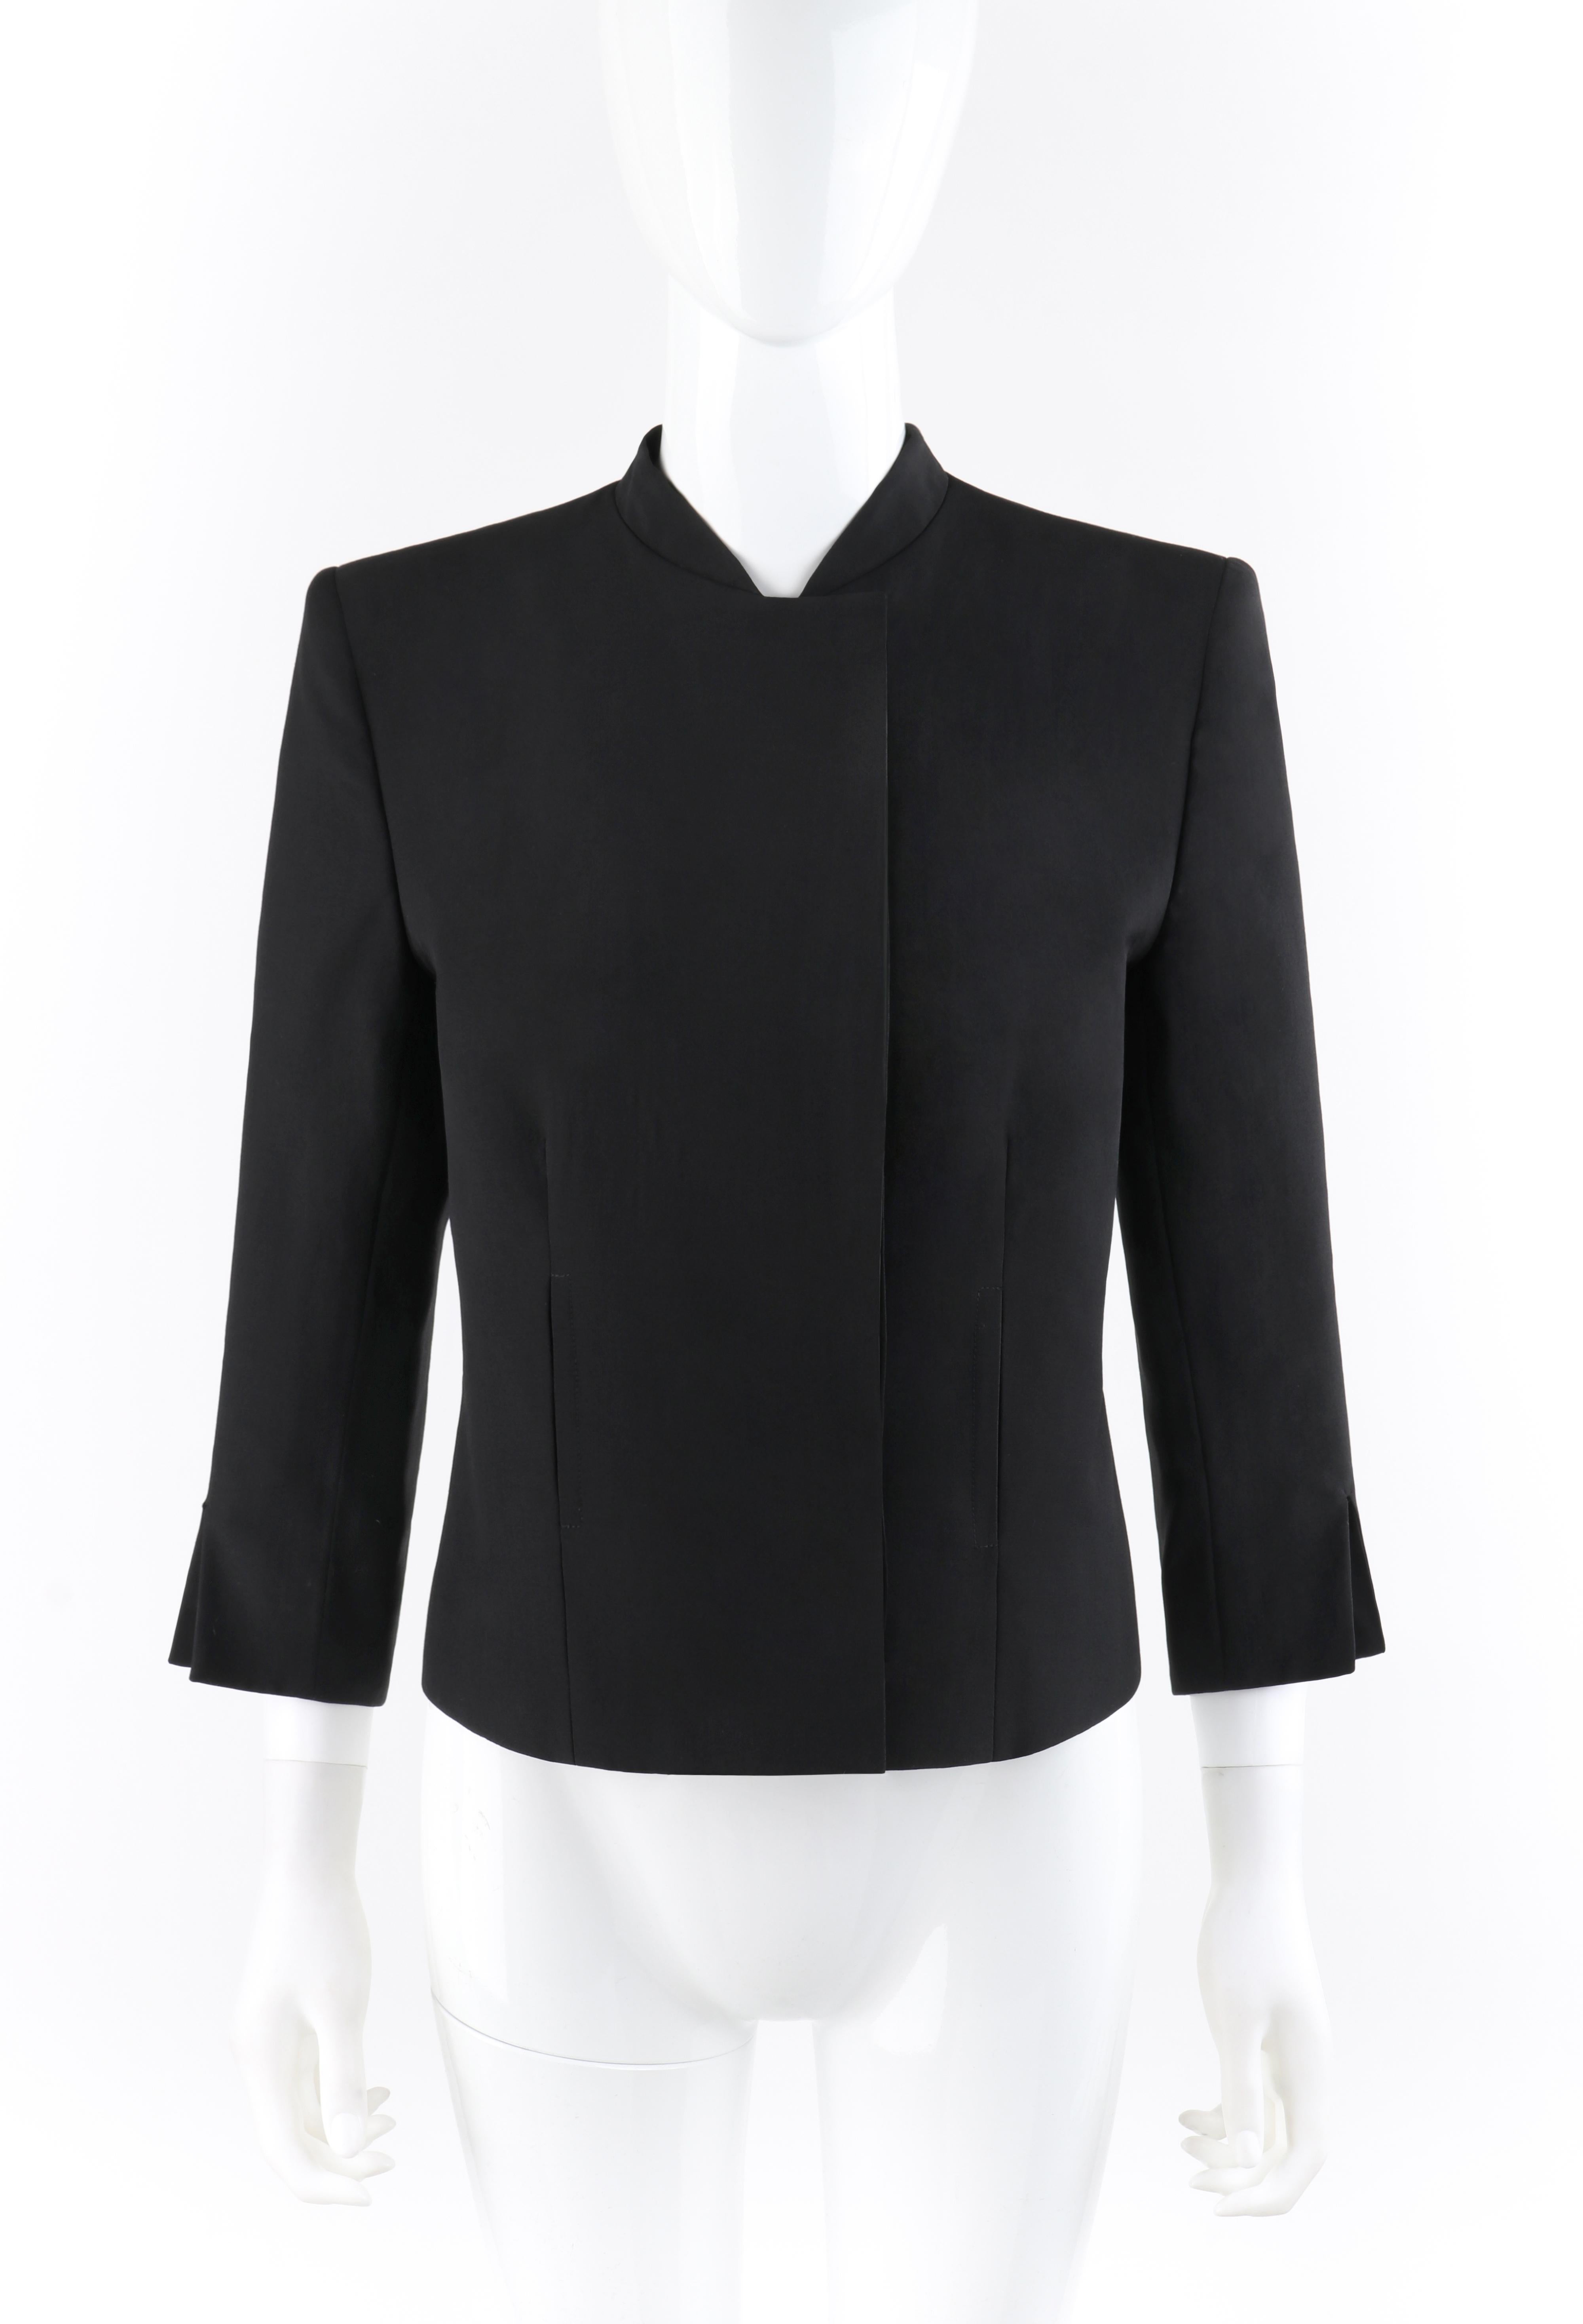 ALEXANDER McQUEEN S/S 1999 “No. 13” Black Concealed ButtonExtended Shoulder Blazer / Jacket

Brand / Manufacturer: Alexander McQueen
Collection: S/S 1999 “No. 13”
Designer: Alexander McQueen
Style: Tailored concealed button-up blazer; ¾ length